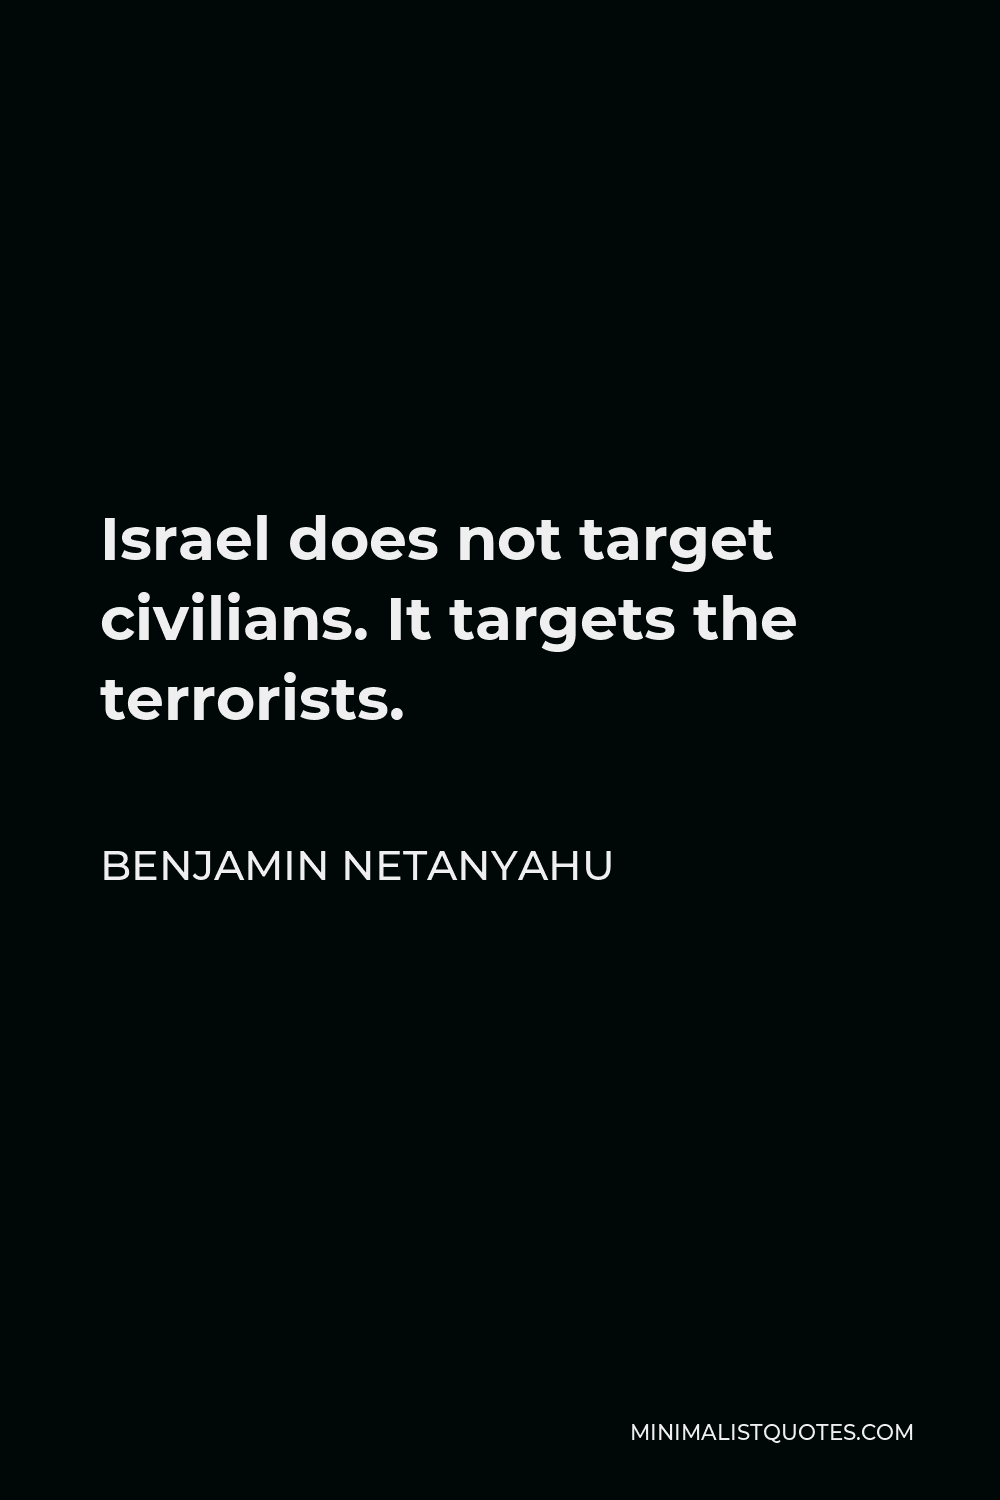 Benjamin Netanyahu Quote - Israel does not target civilians. It targets the terrorists.